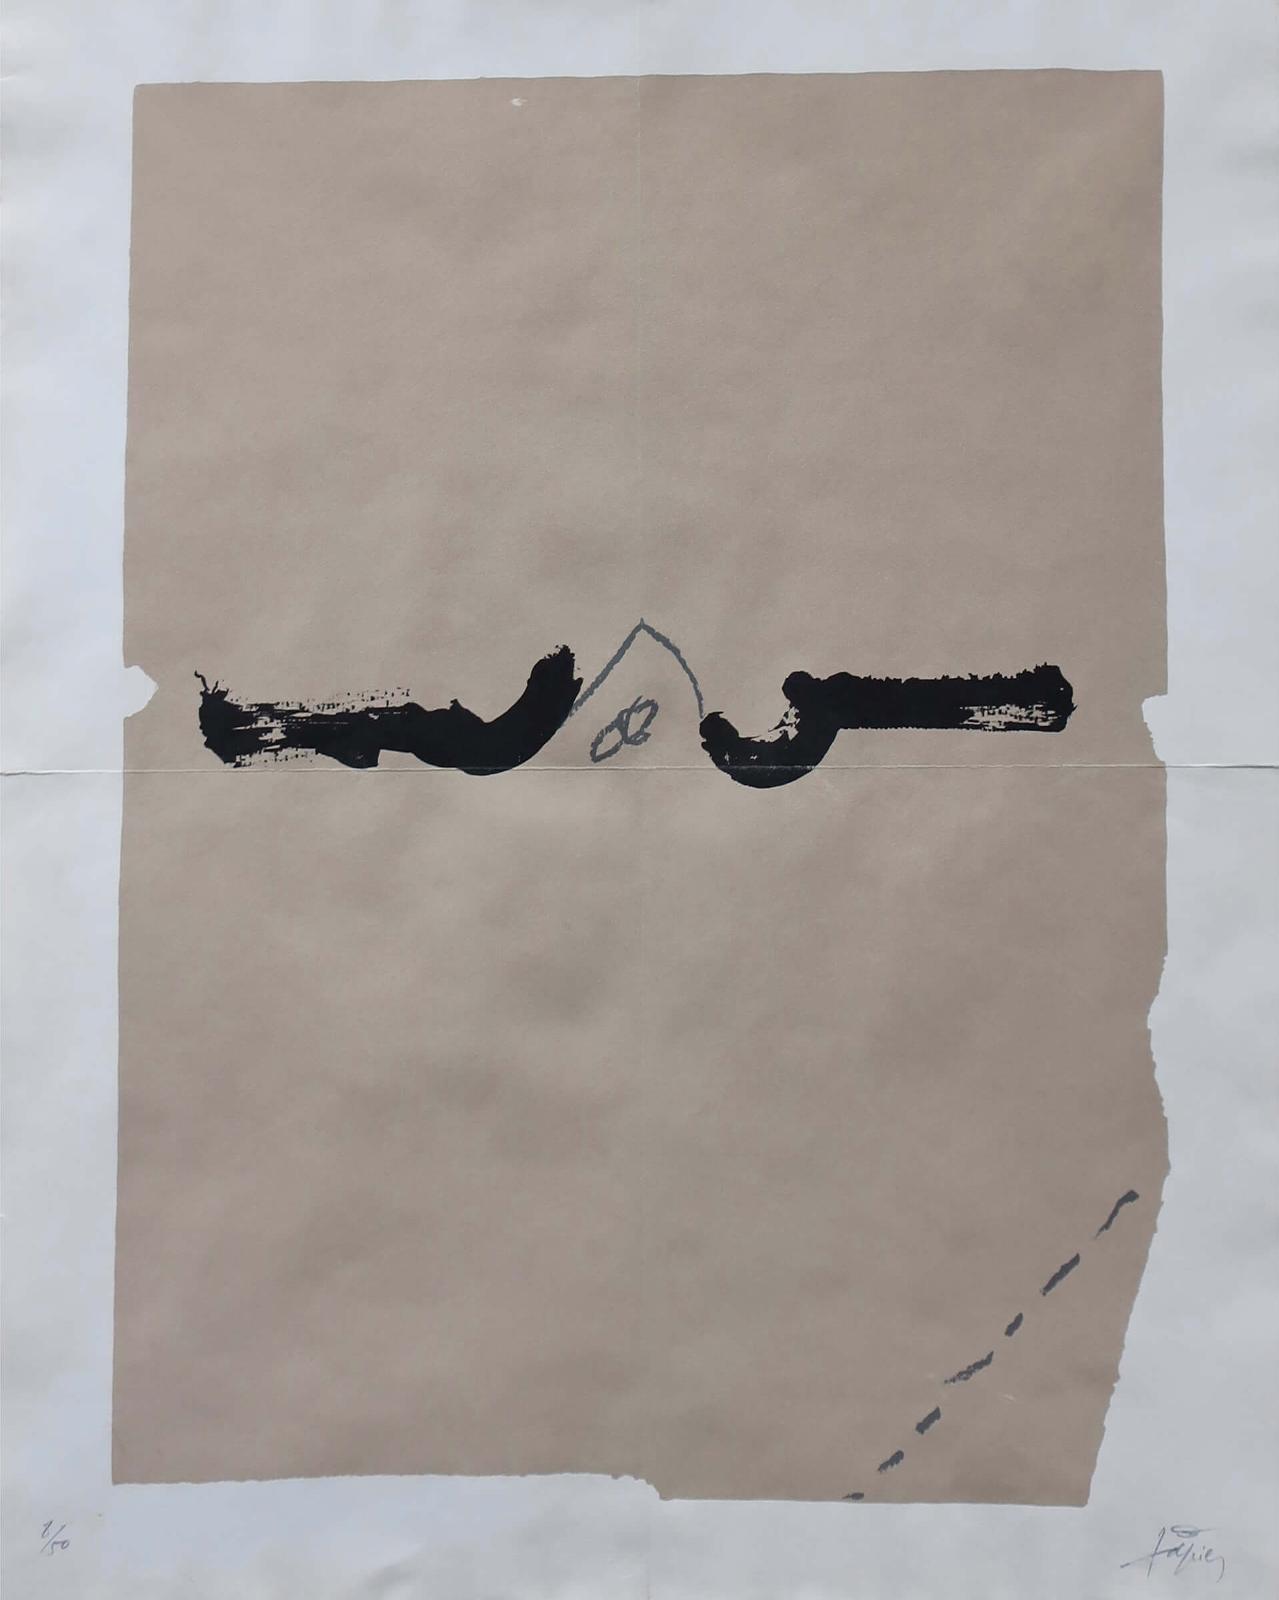 Antoni Tàpies (1923-2012) - Untitled